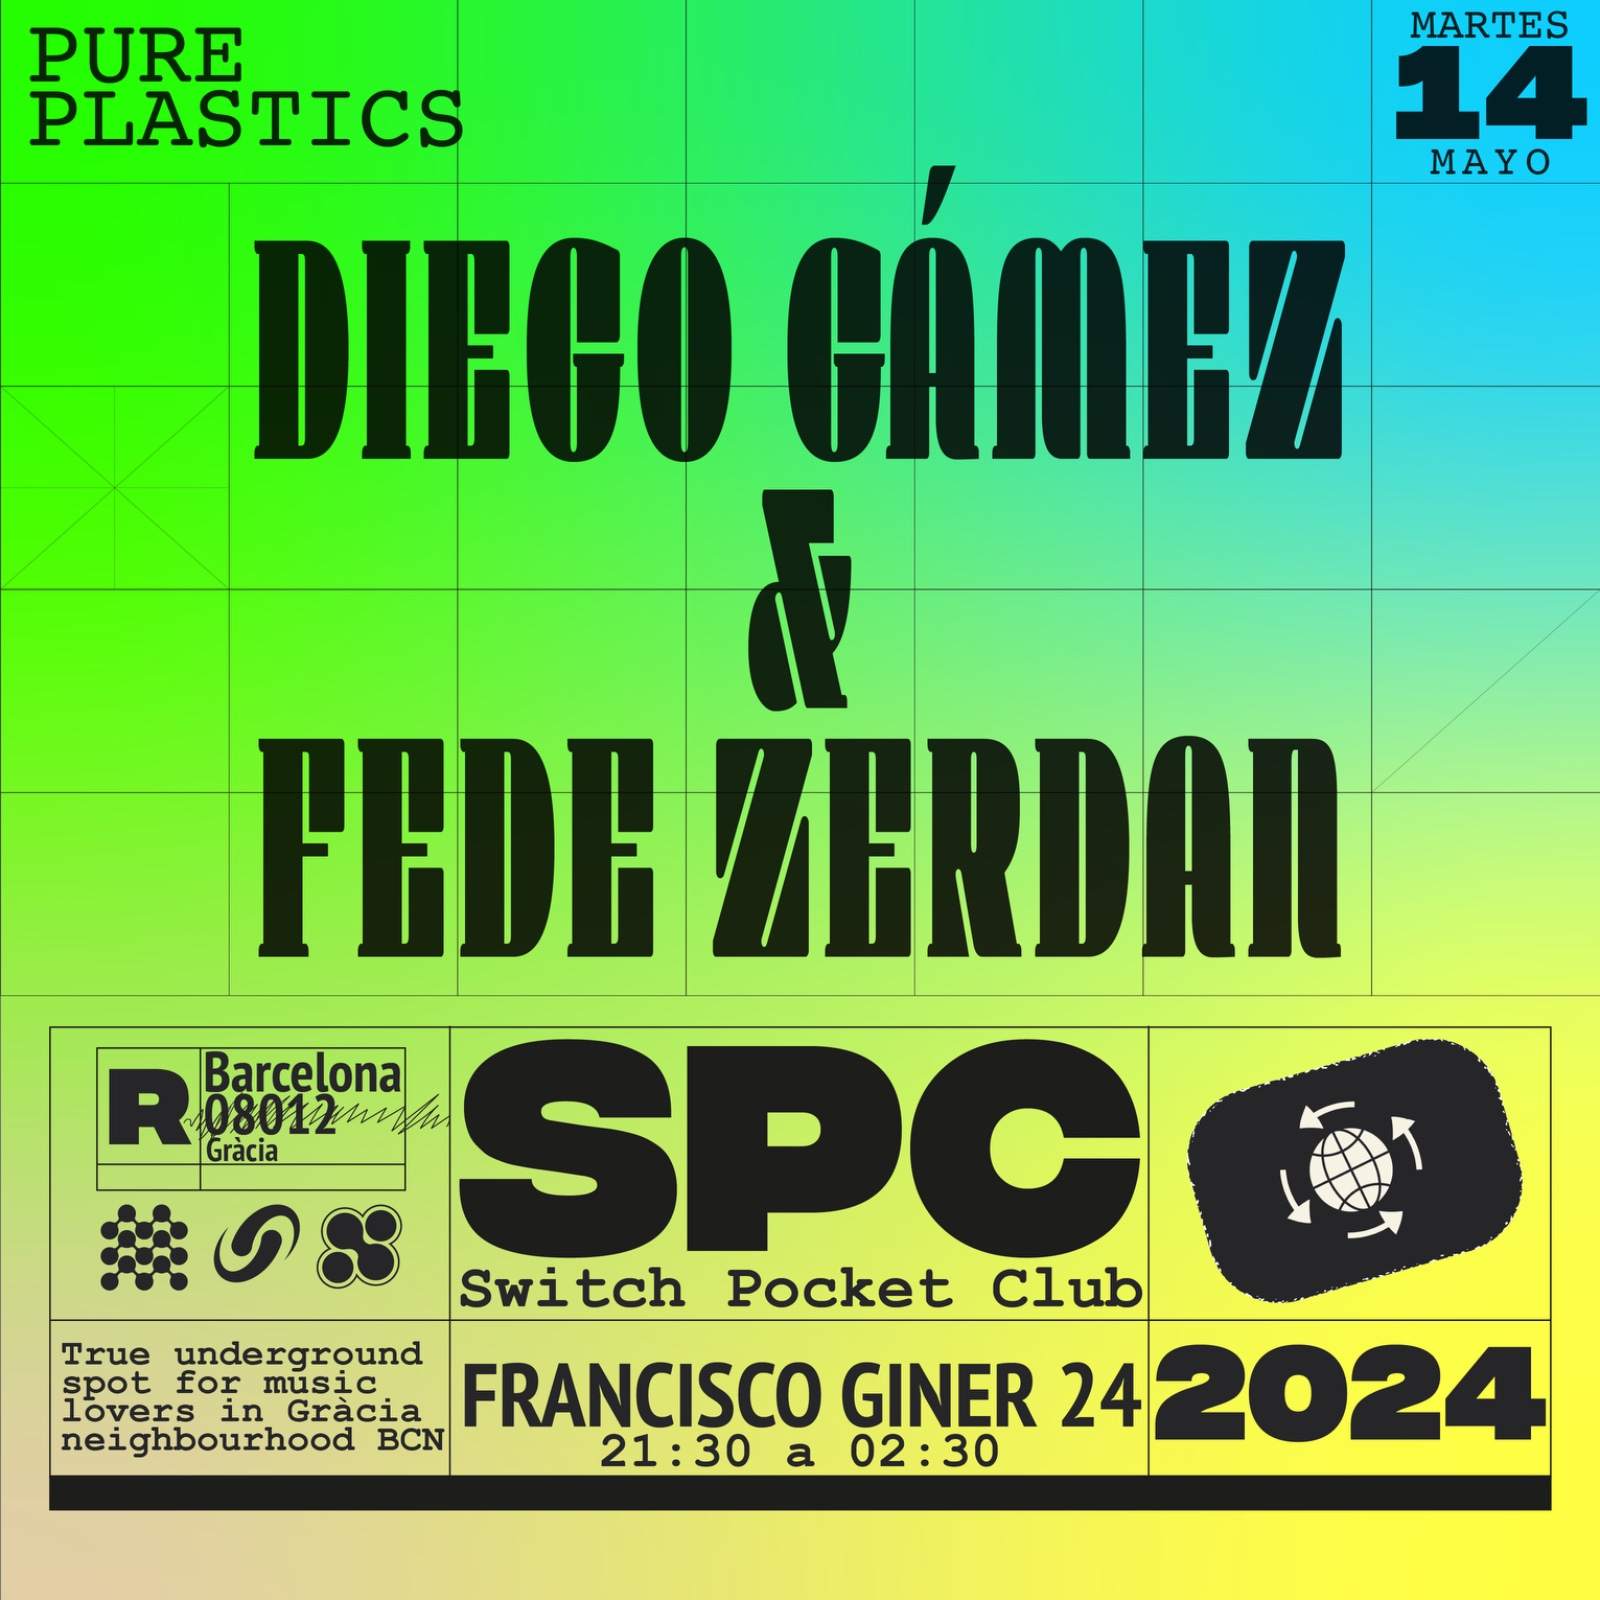 Pure Plastics: Diego Gámez, Fede Zerdan - フライヤー表